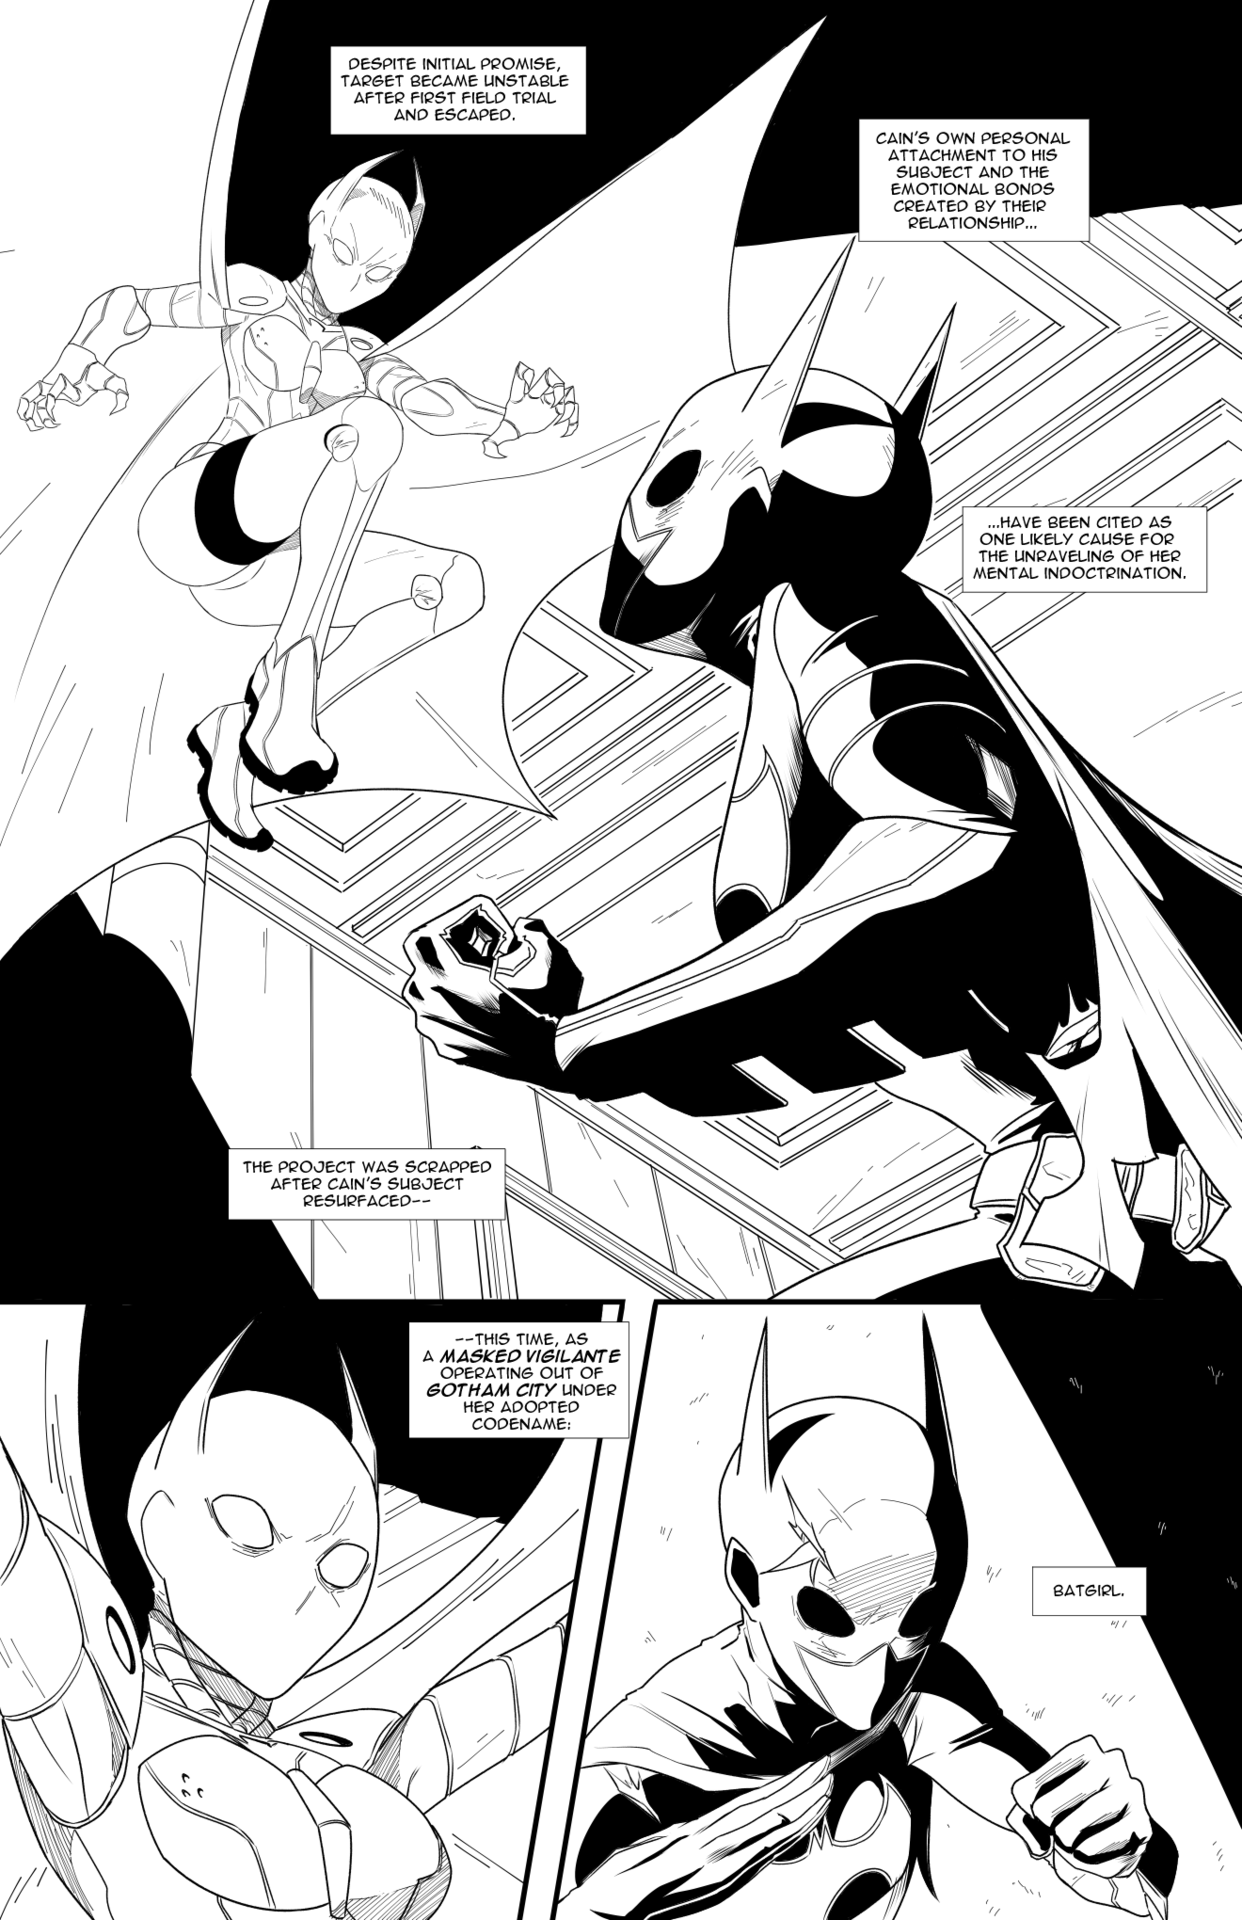 swainart: Batgirl Vs #1 Page 2 Credits: Swain: http://swainart.tumblr.com/ Psudonym: